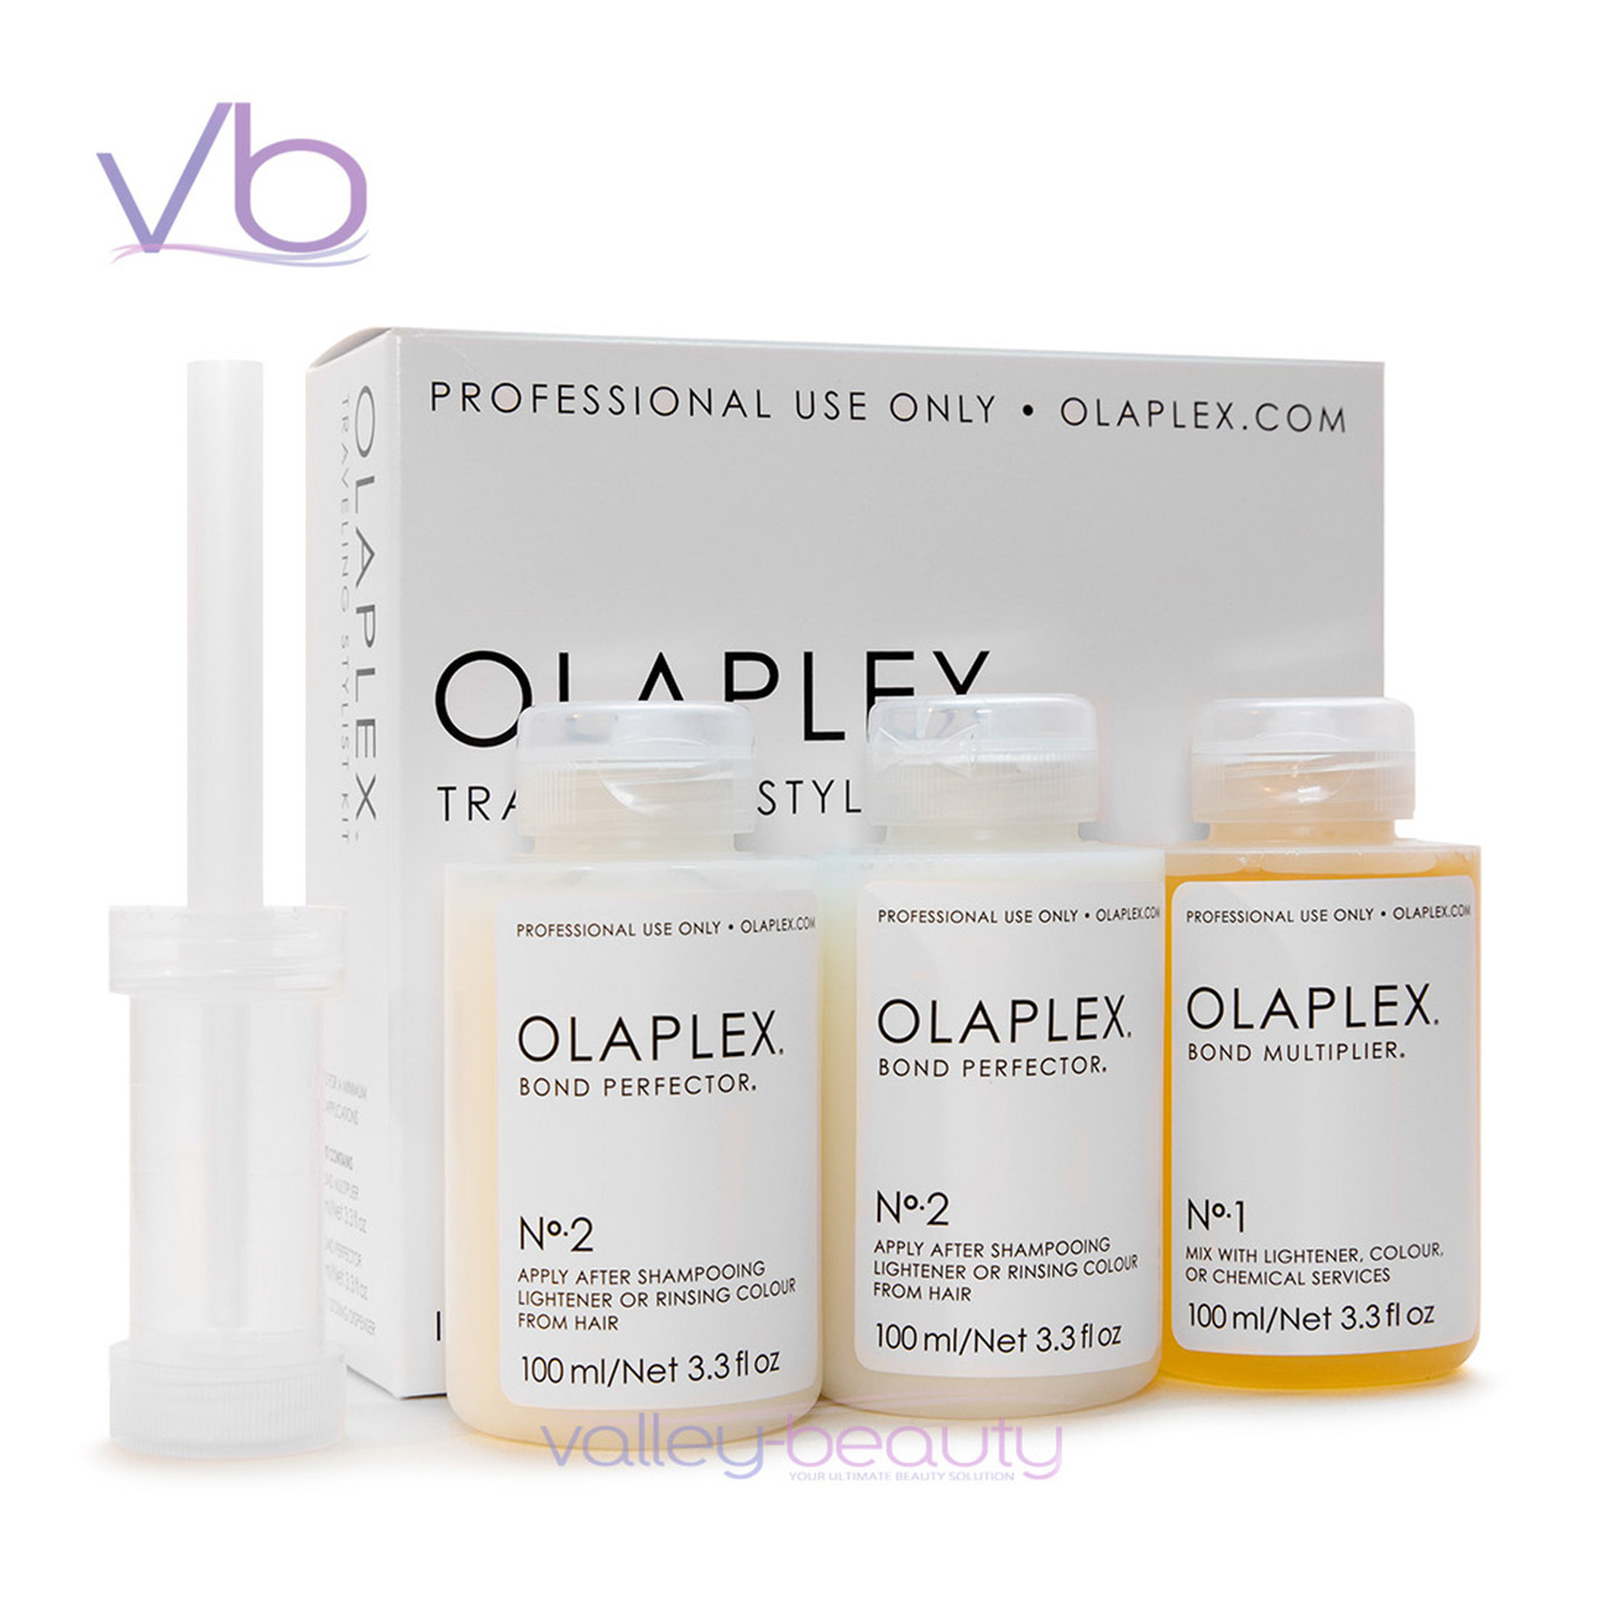 Olaplex 3pc. Step 1, 2 Traveling Stylist Kit